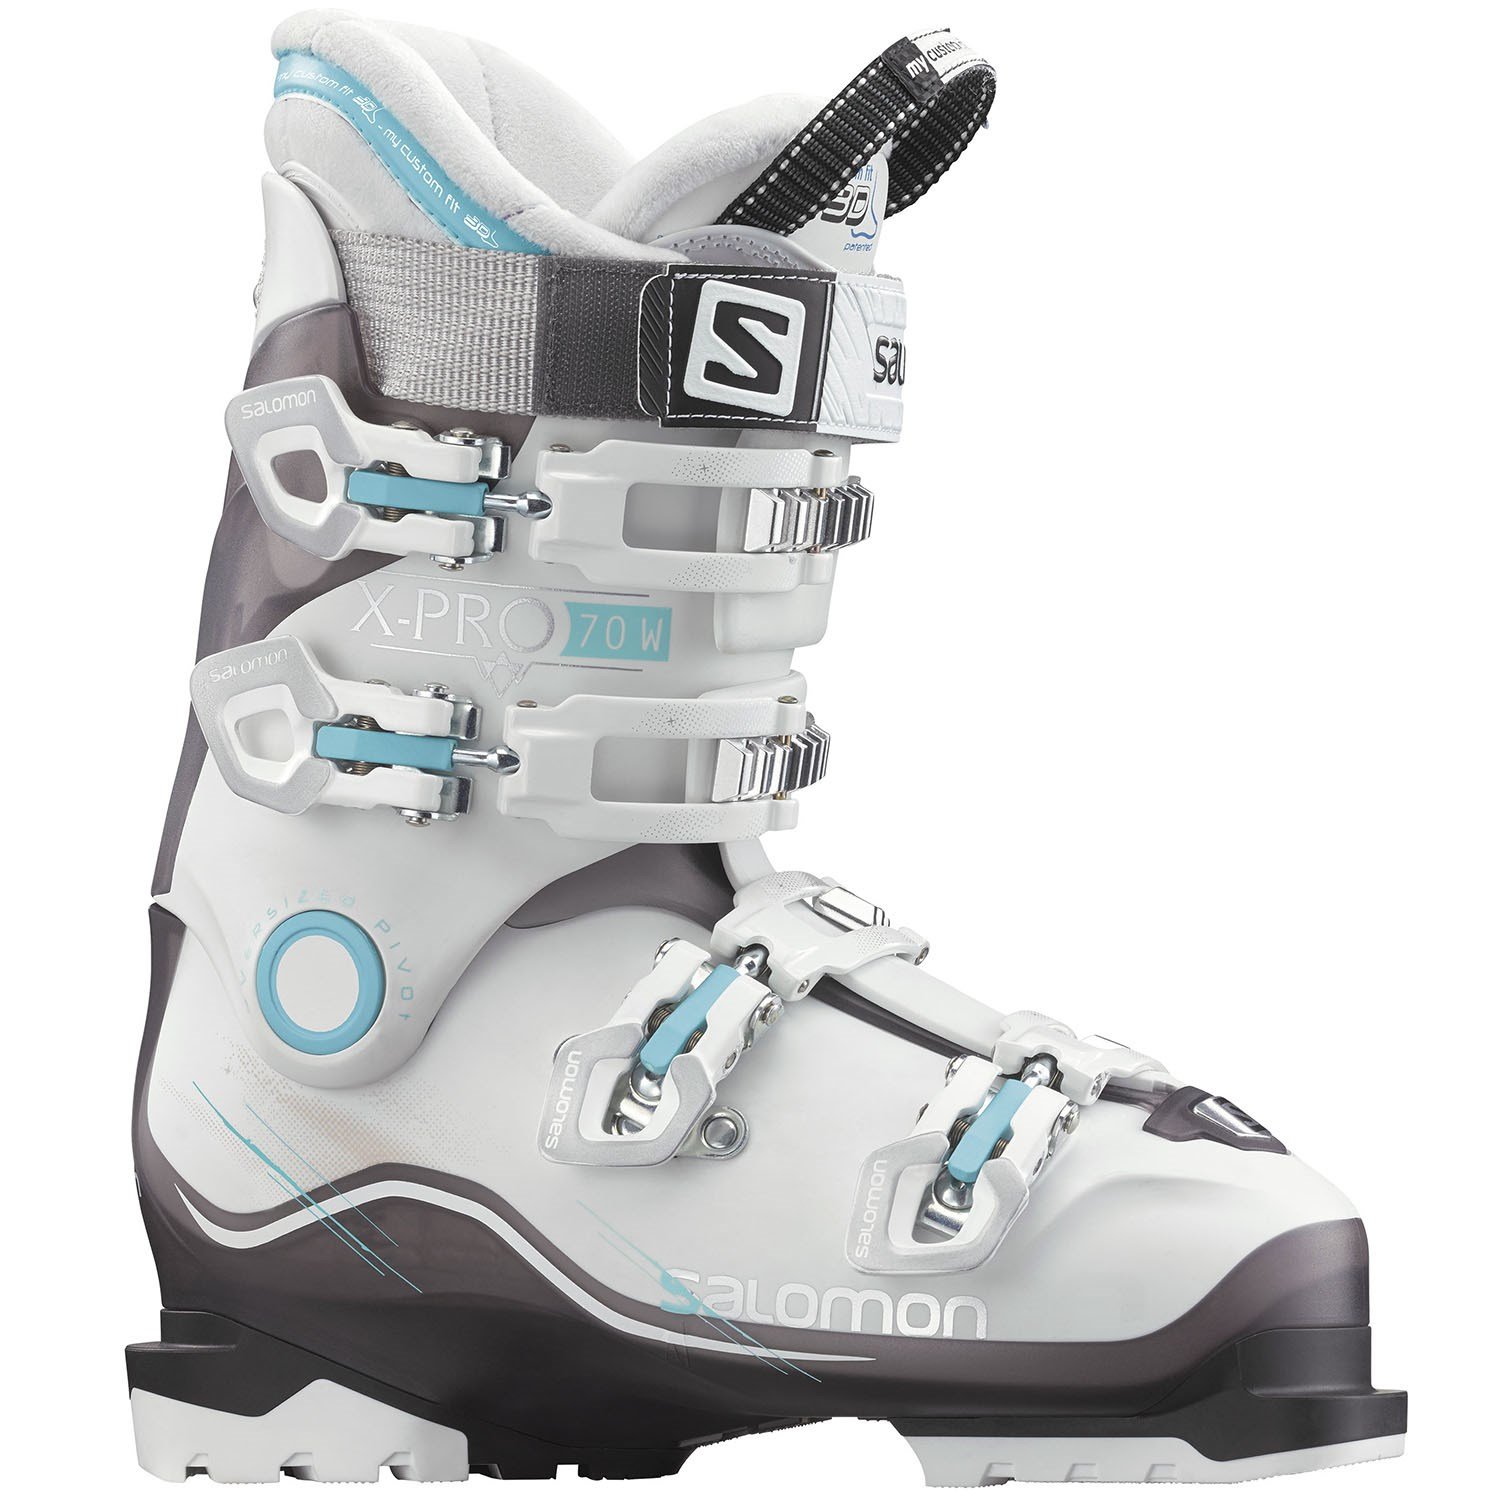 Gemakkelijk heuvel veiligheid Salomon X Pro 70 Ski Boots - Women's 2016 | evo